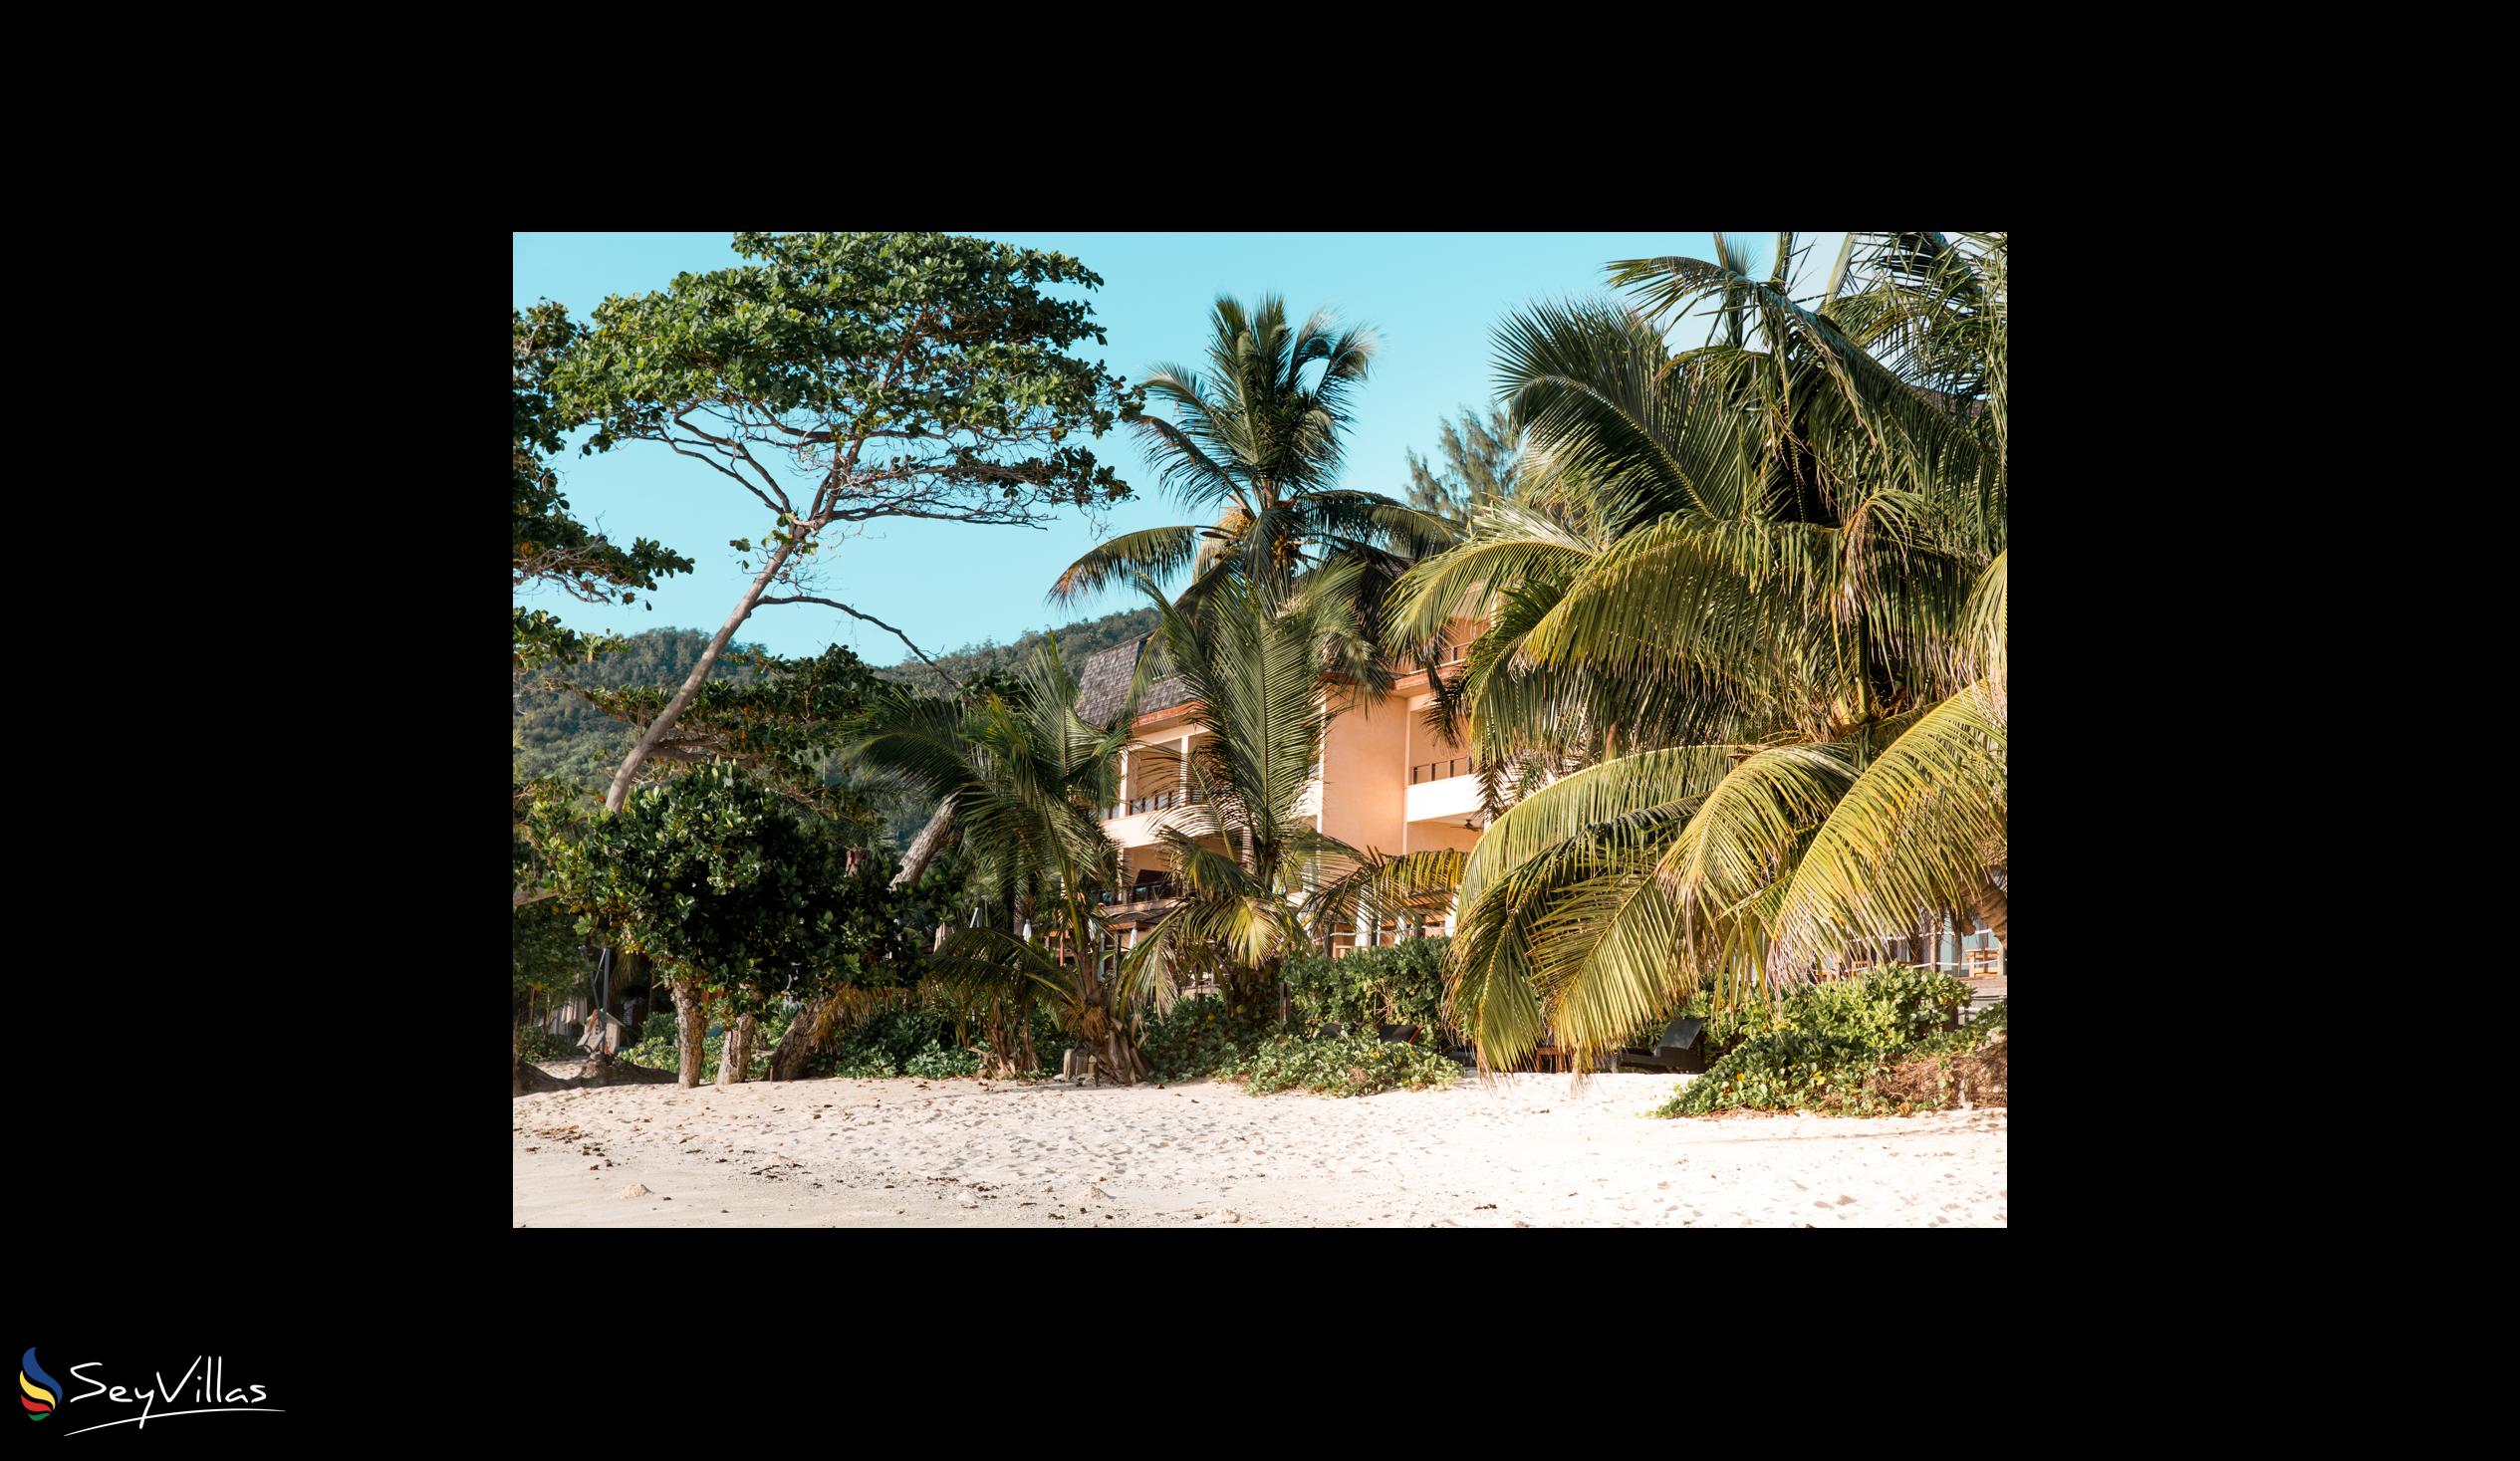 Foto 11: Double Tree by Hilton - Allamanda Resort & Spa - Aussenbereich - Mahé (Seychellen)